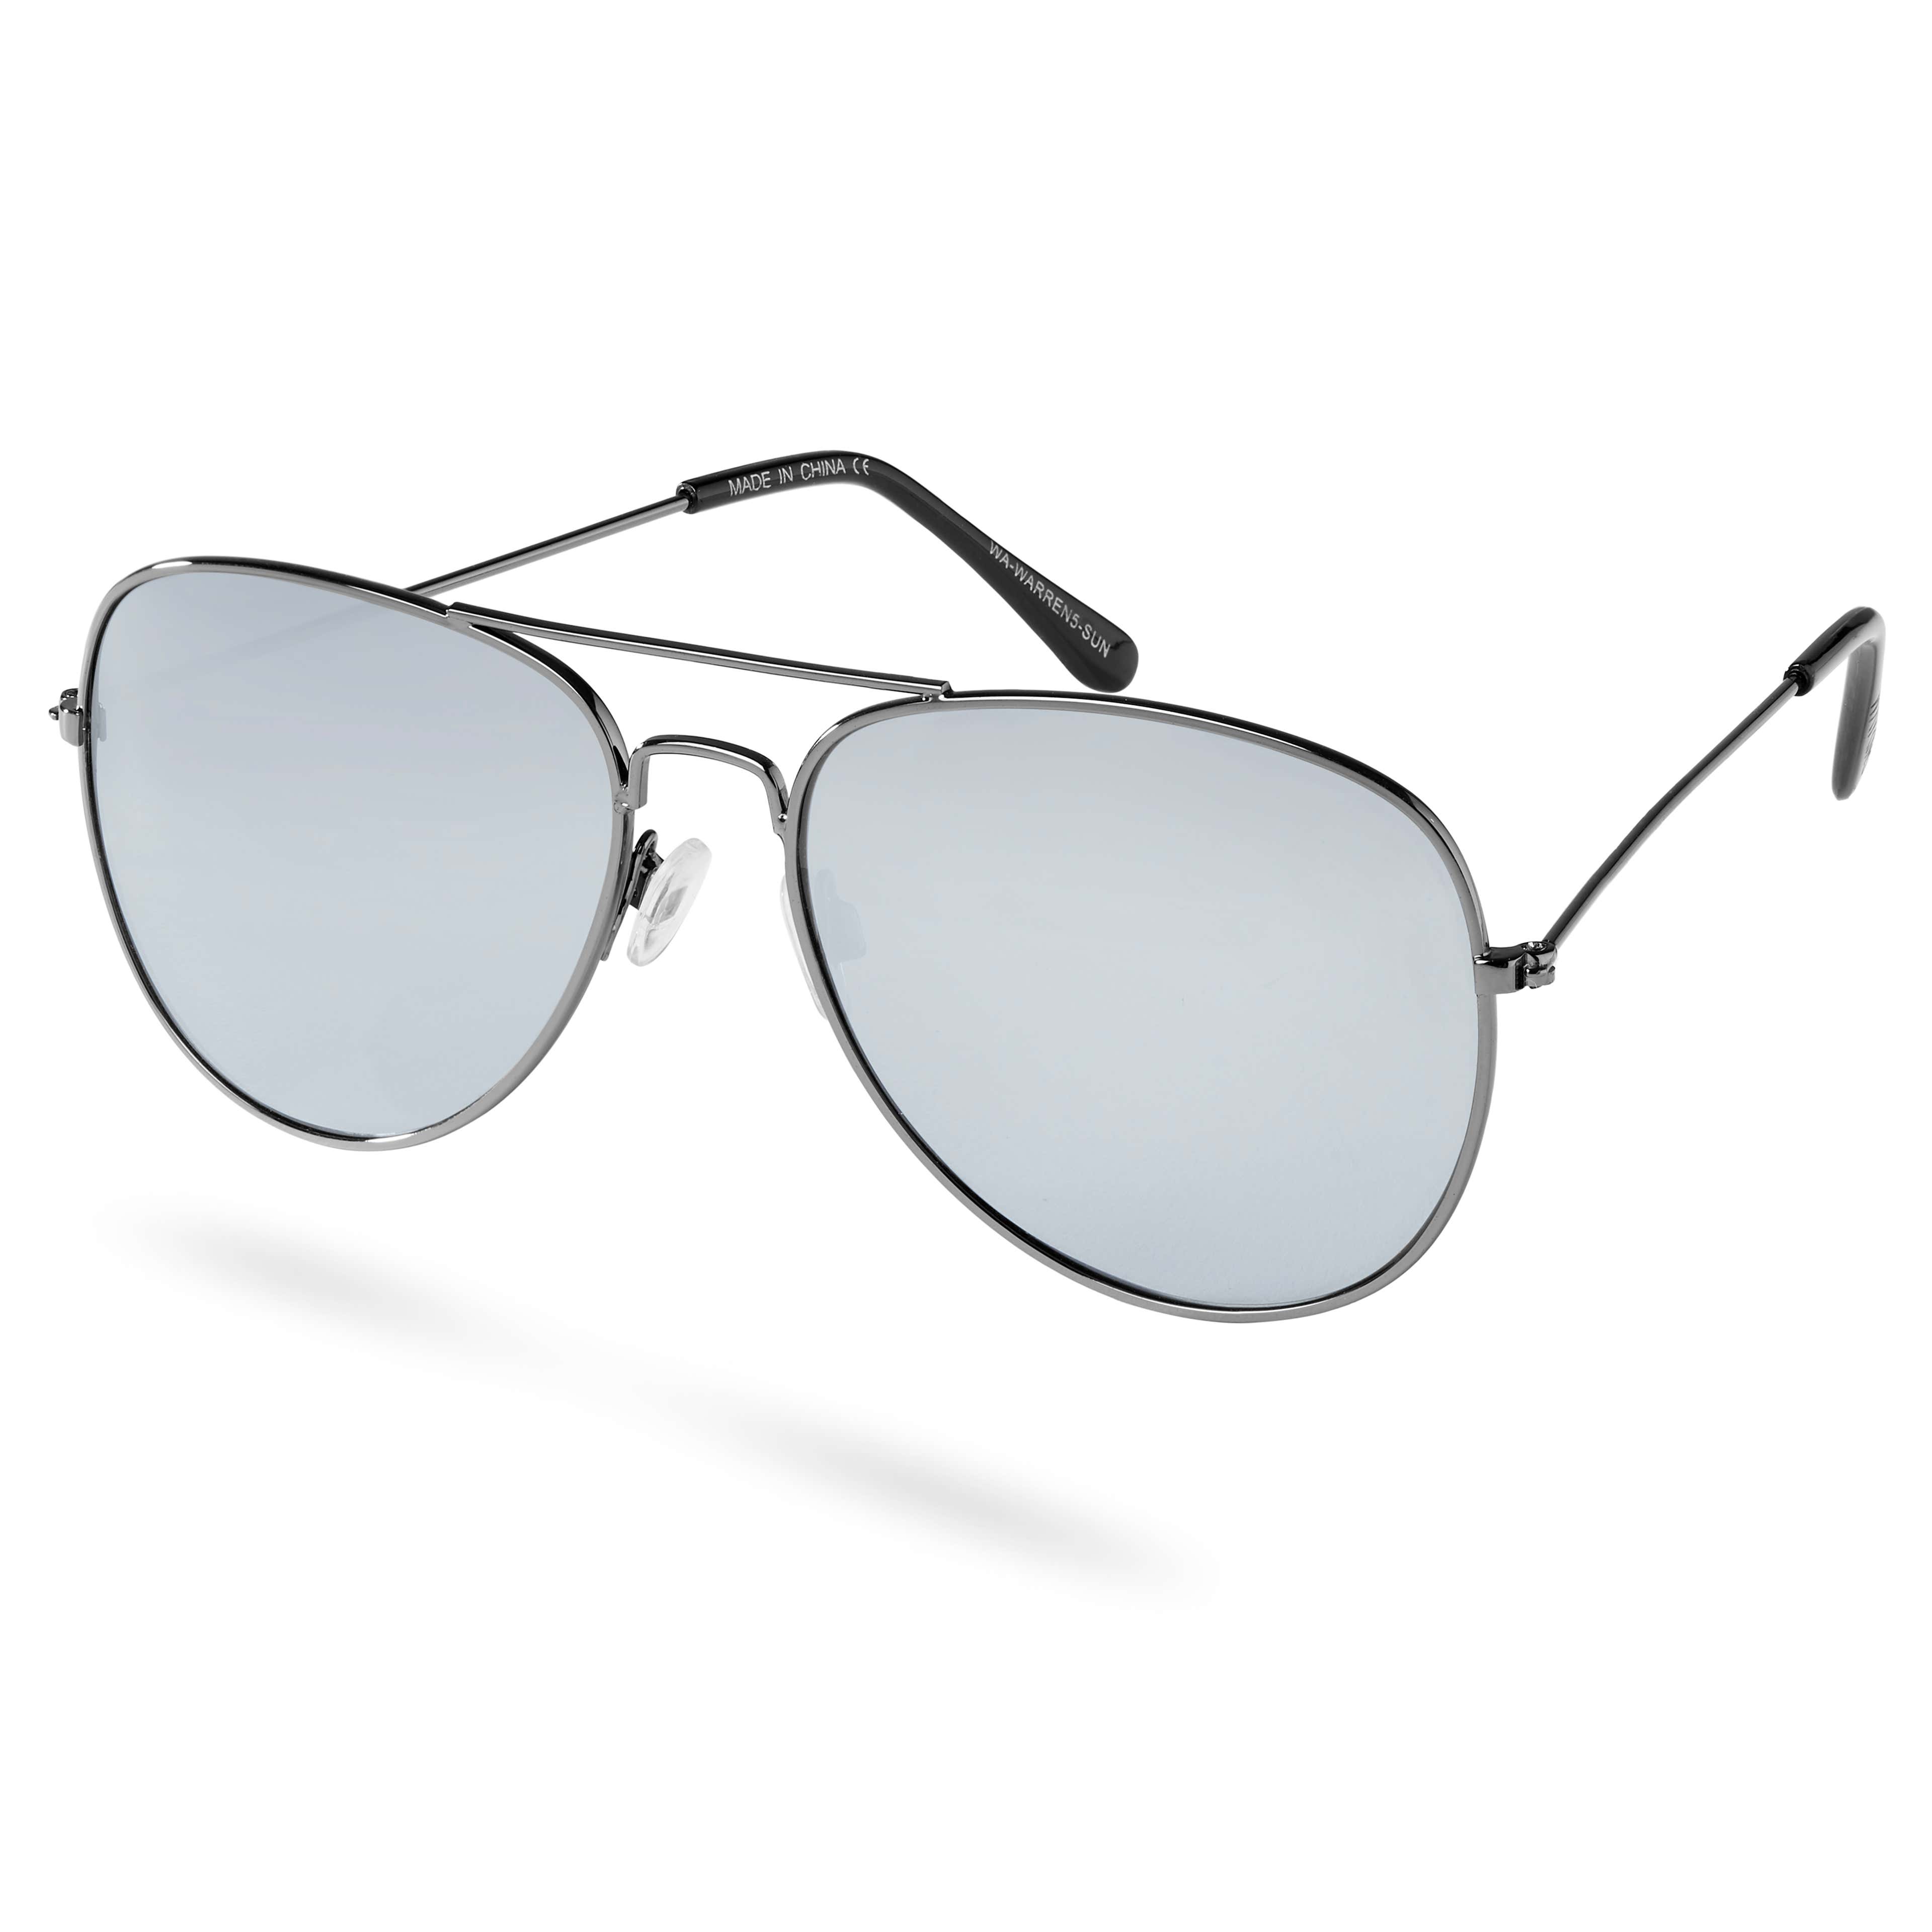 Warren Black & Mirrored Aviator Vista Sunglasses